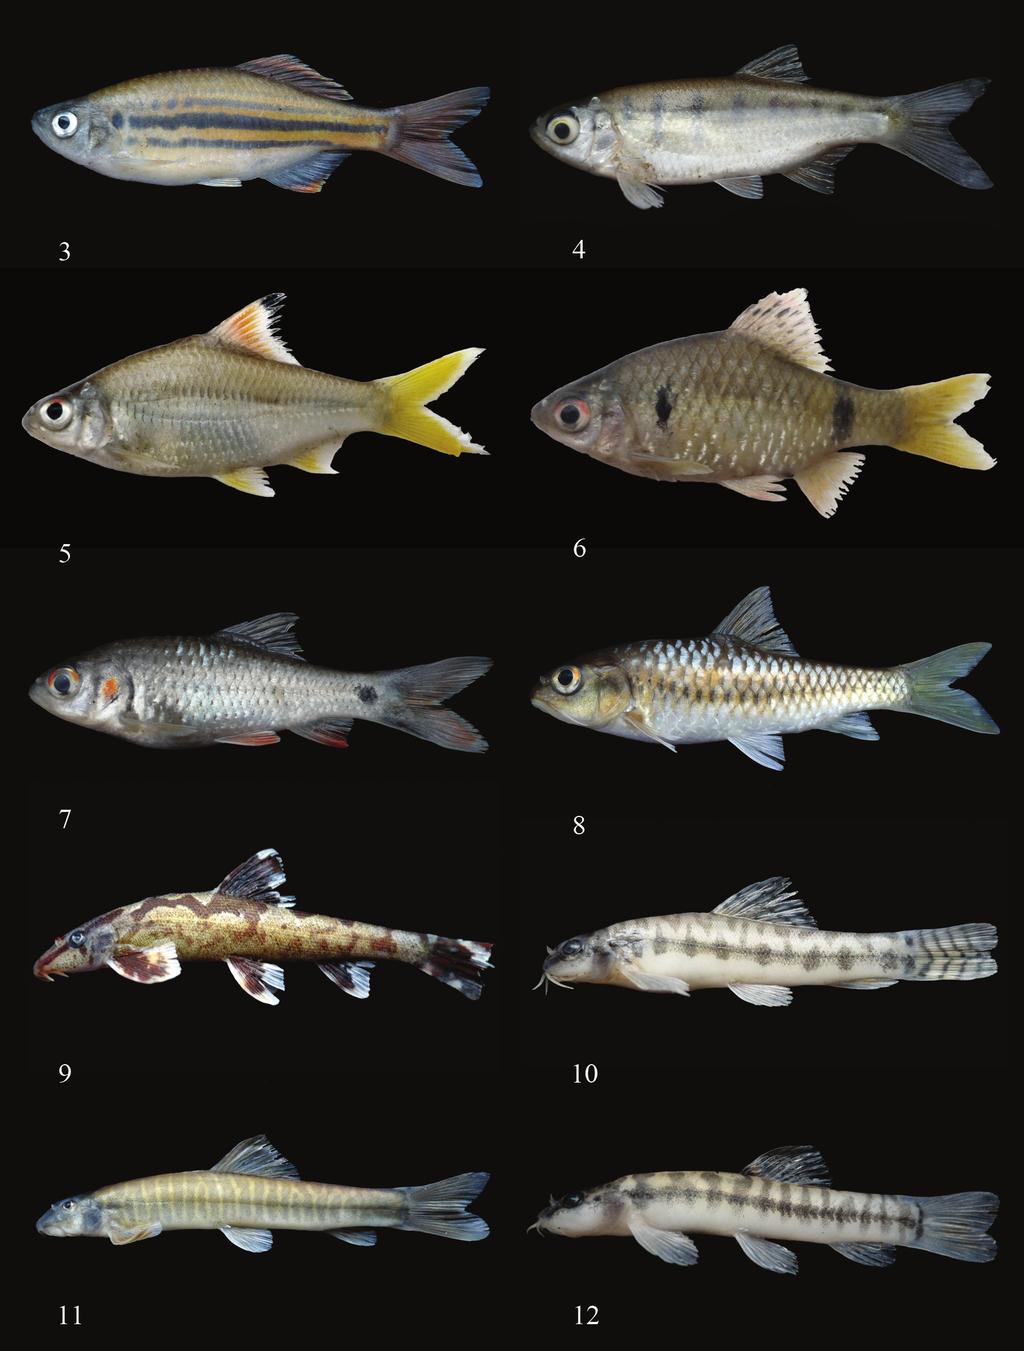 Fields survey of freshwater fishes in Upper Moei River, Salween Basin, frontier of Thailand and Myanmar 255 Figure 3. Devario sp., 55 mmsl. Figure 4. Barilius infrafasciatus, 38 mmsl. Figure 5.